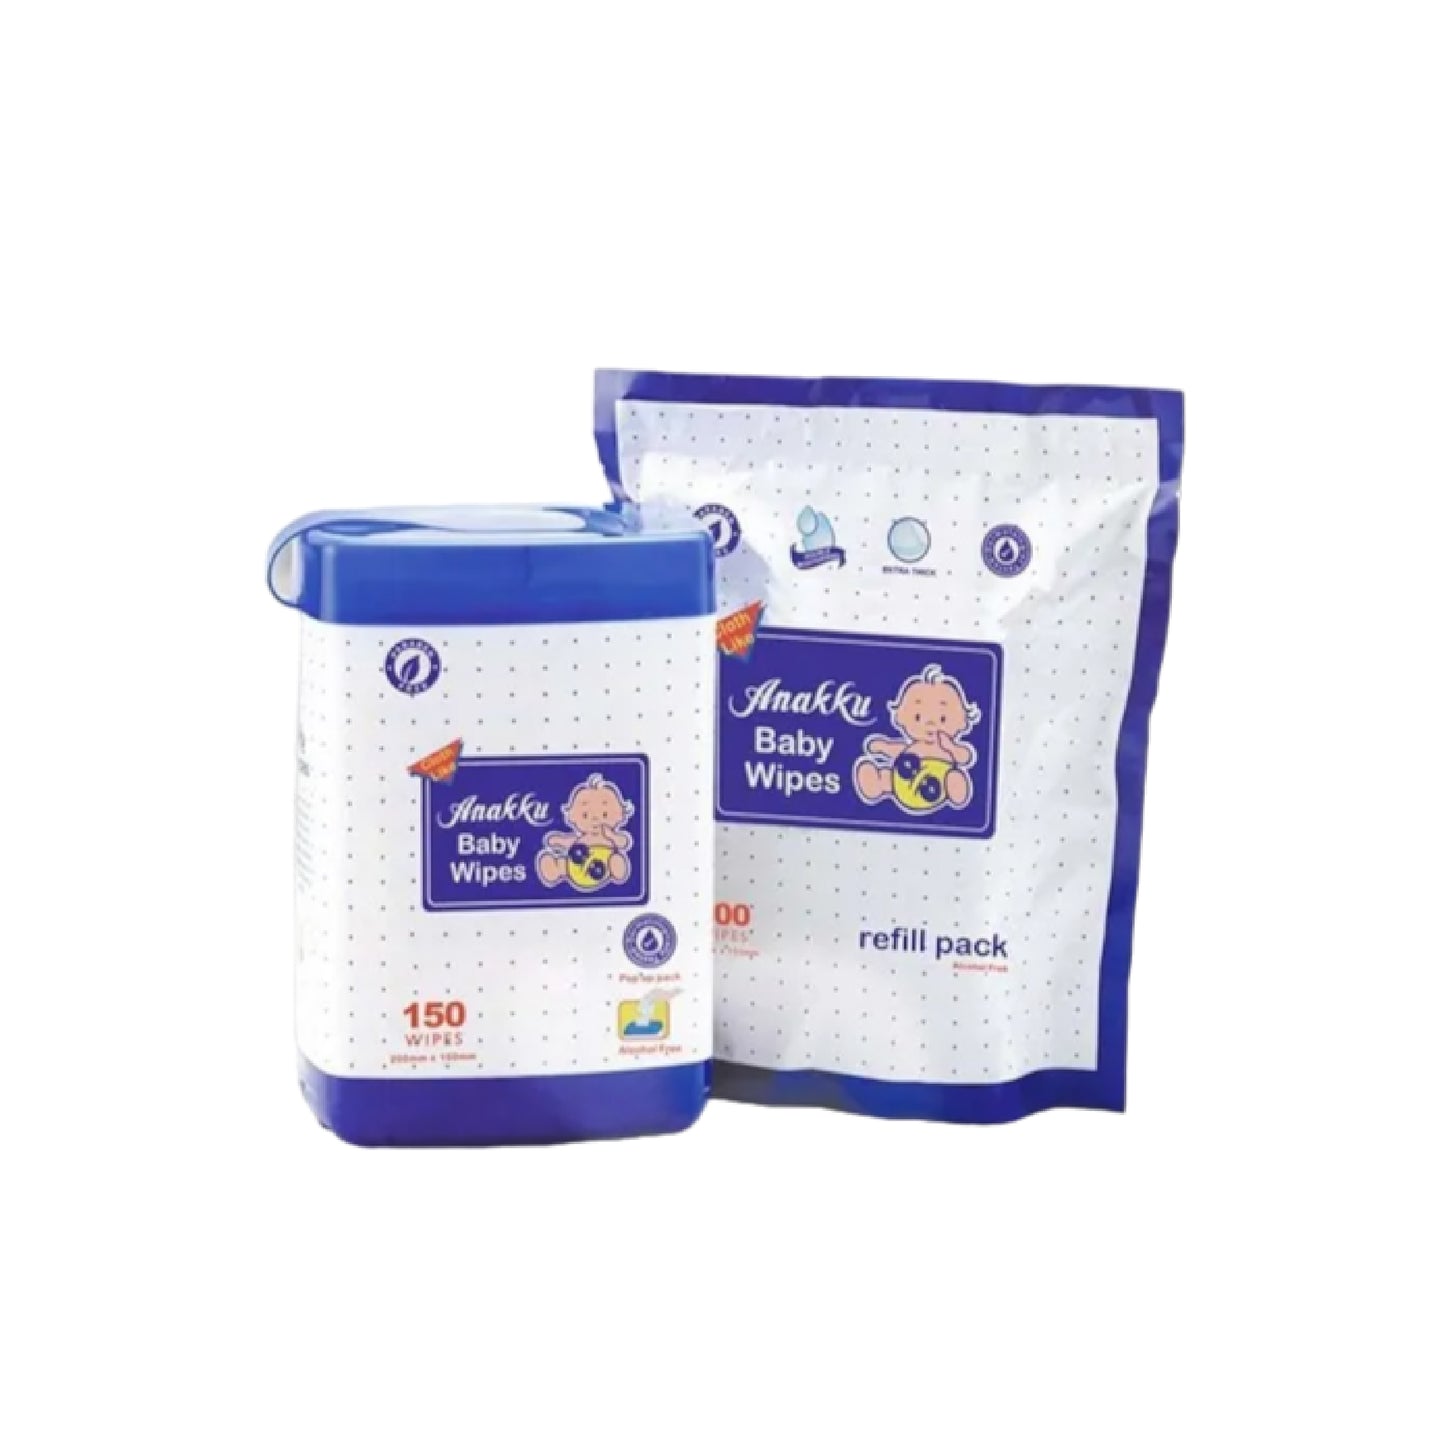 Anakku Baby Wipes Wet Tissue/Tisu Basah Bayi - Canister (150's) + Refill Pack (100's) WT250